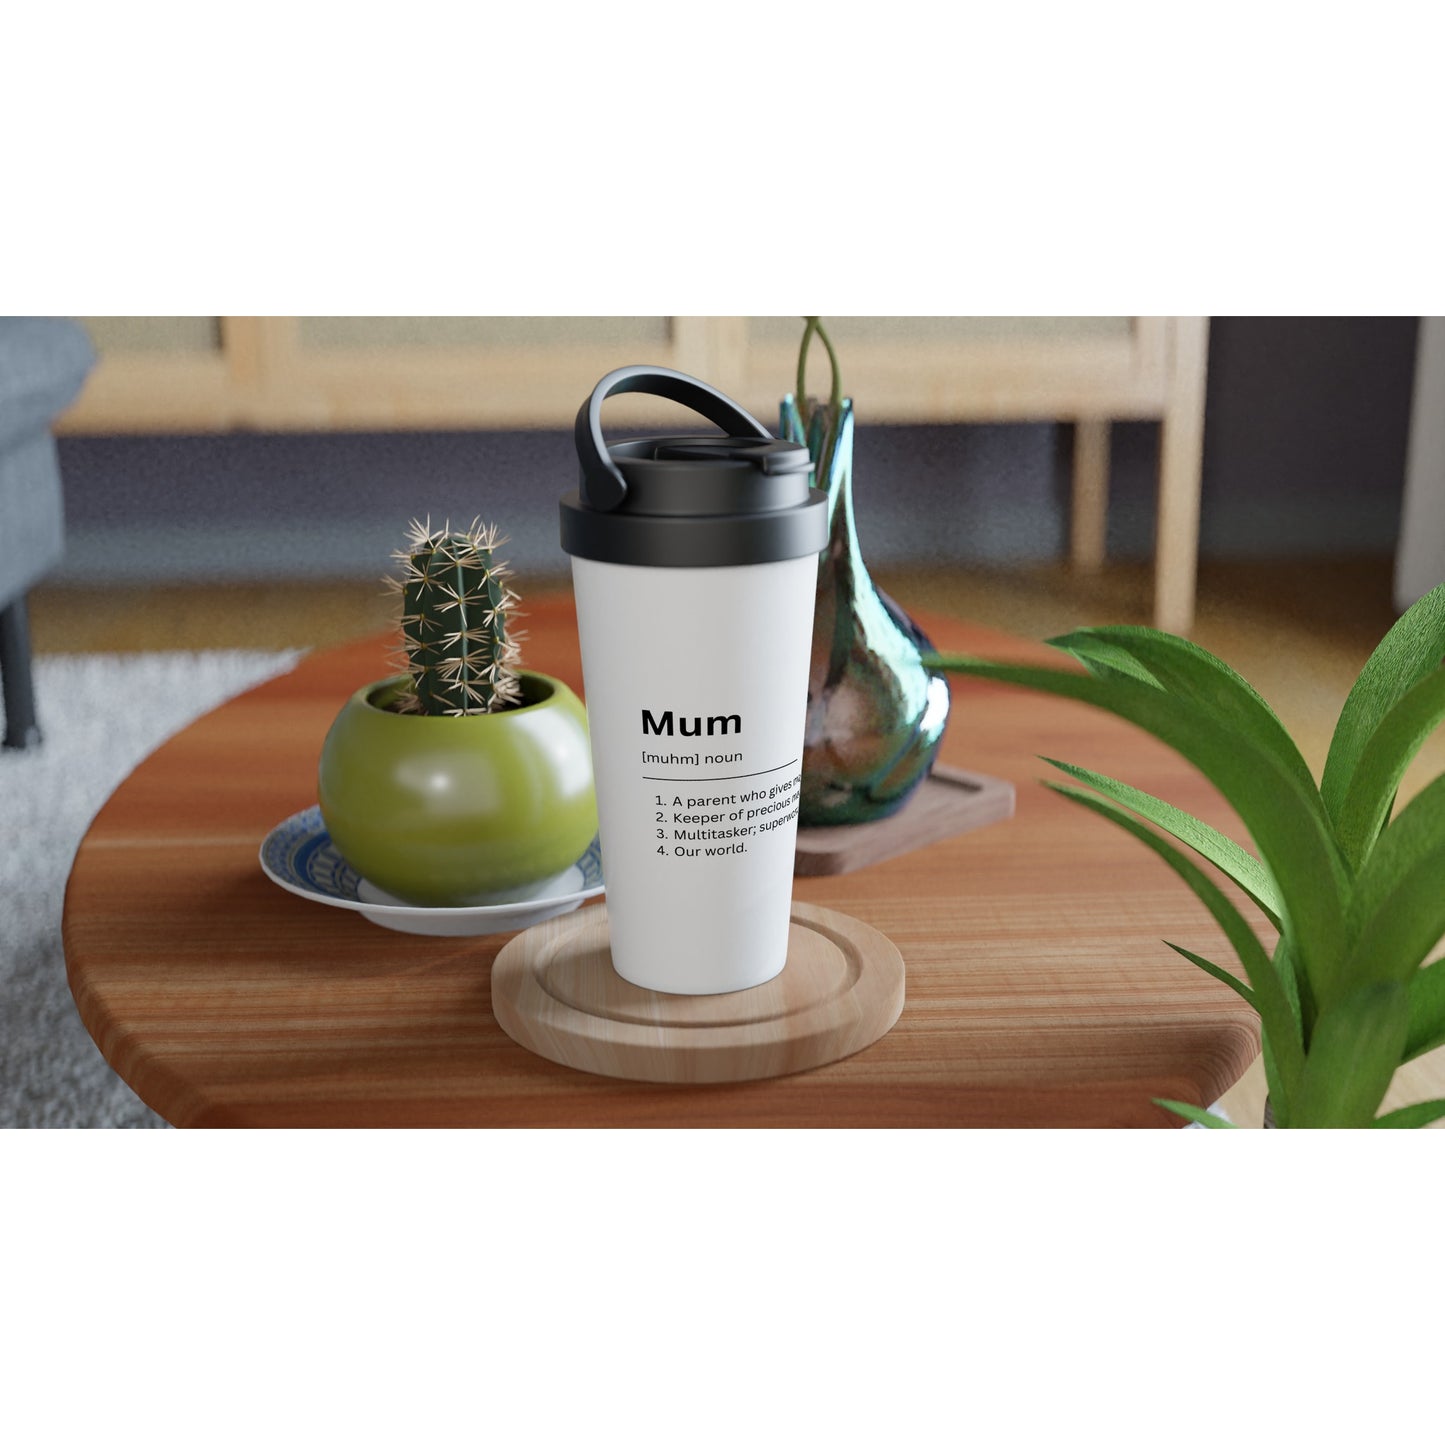 Mum Definition 2 - White 15oz Stainless Steel Travel Mug Travel Mug Mum